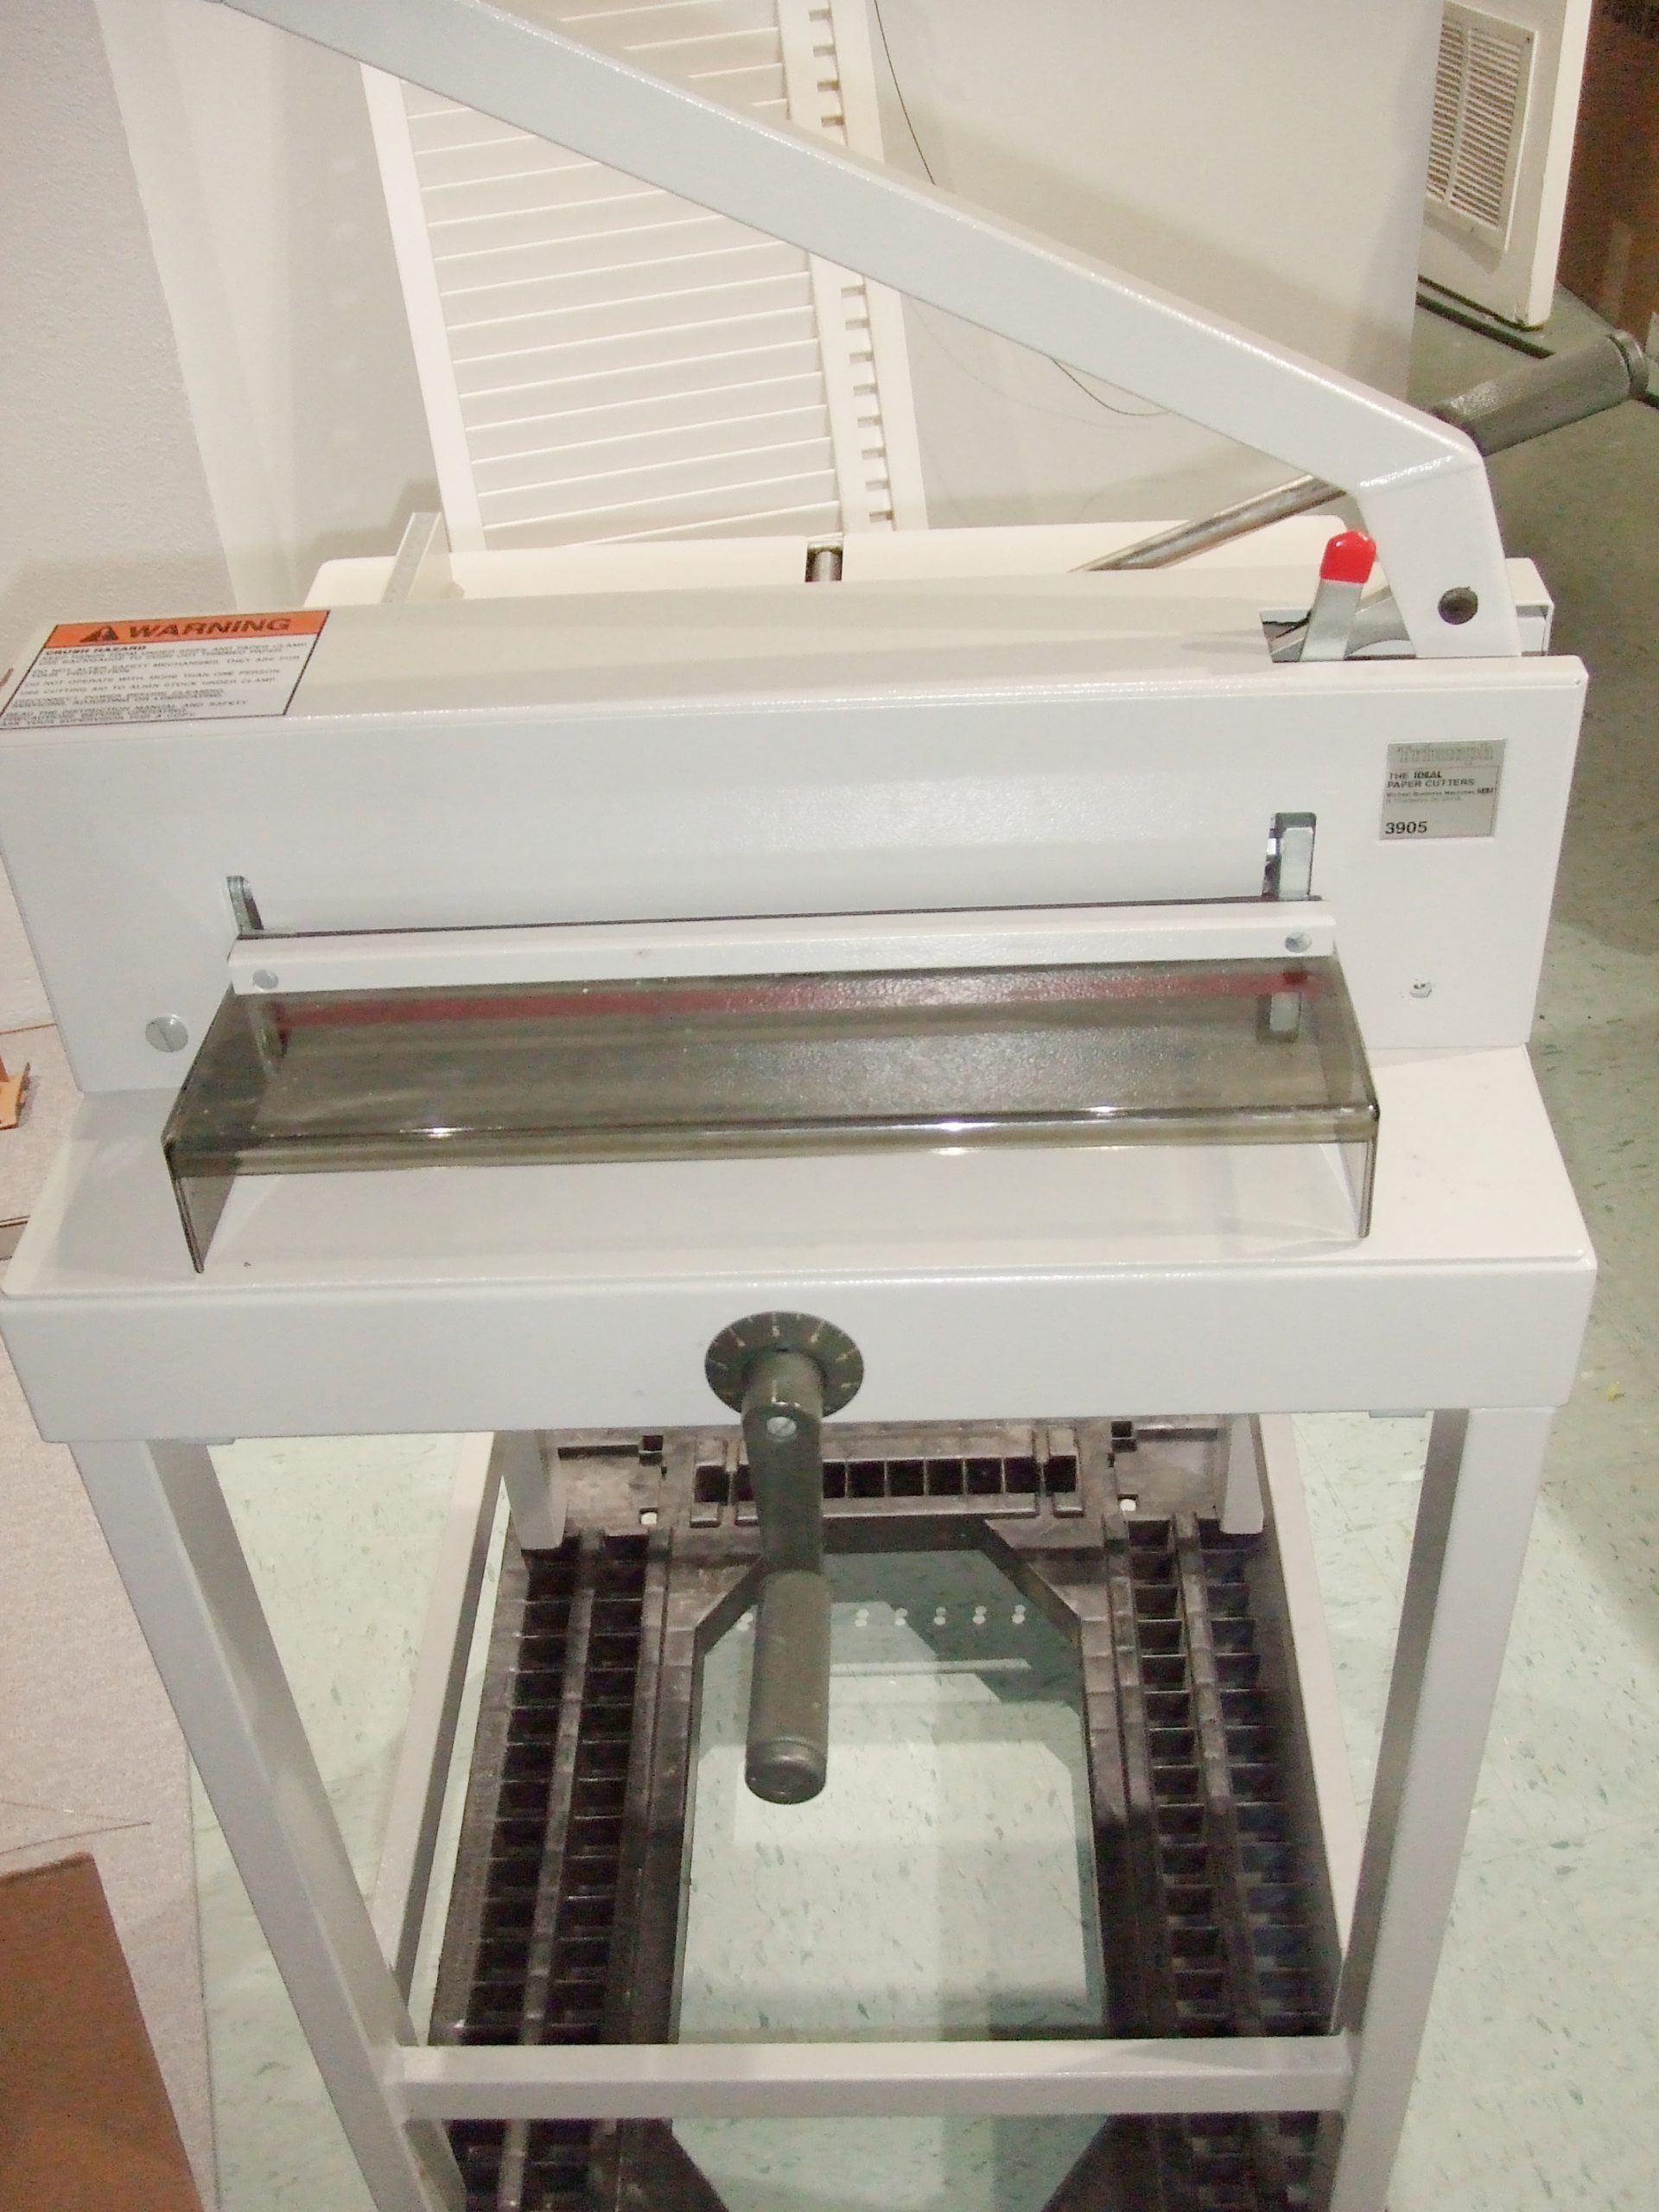 Equipment Lot: Vacuseal 4468H Vacuum Dry Mount Press, Triumph Ideal Paper Cutter & Hermes Engraver (used) Item # UE-091520D (Florida)